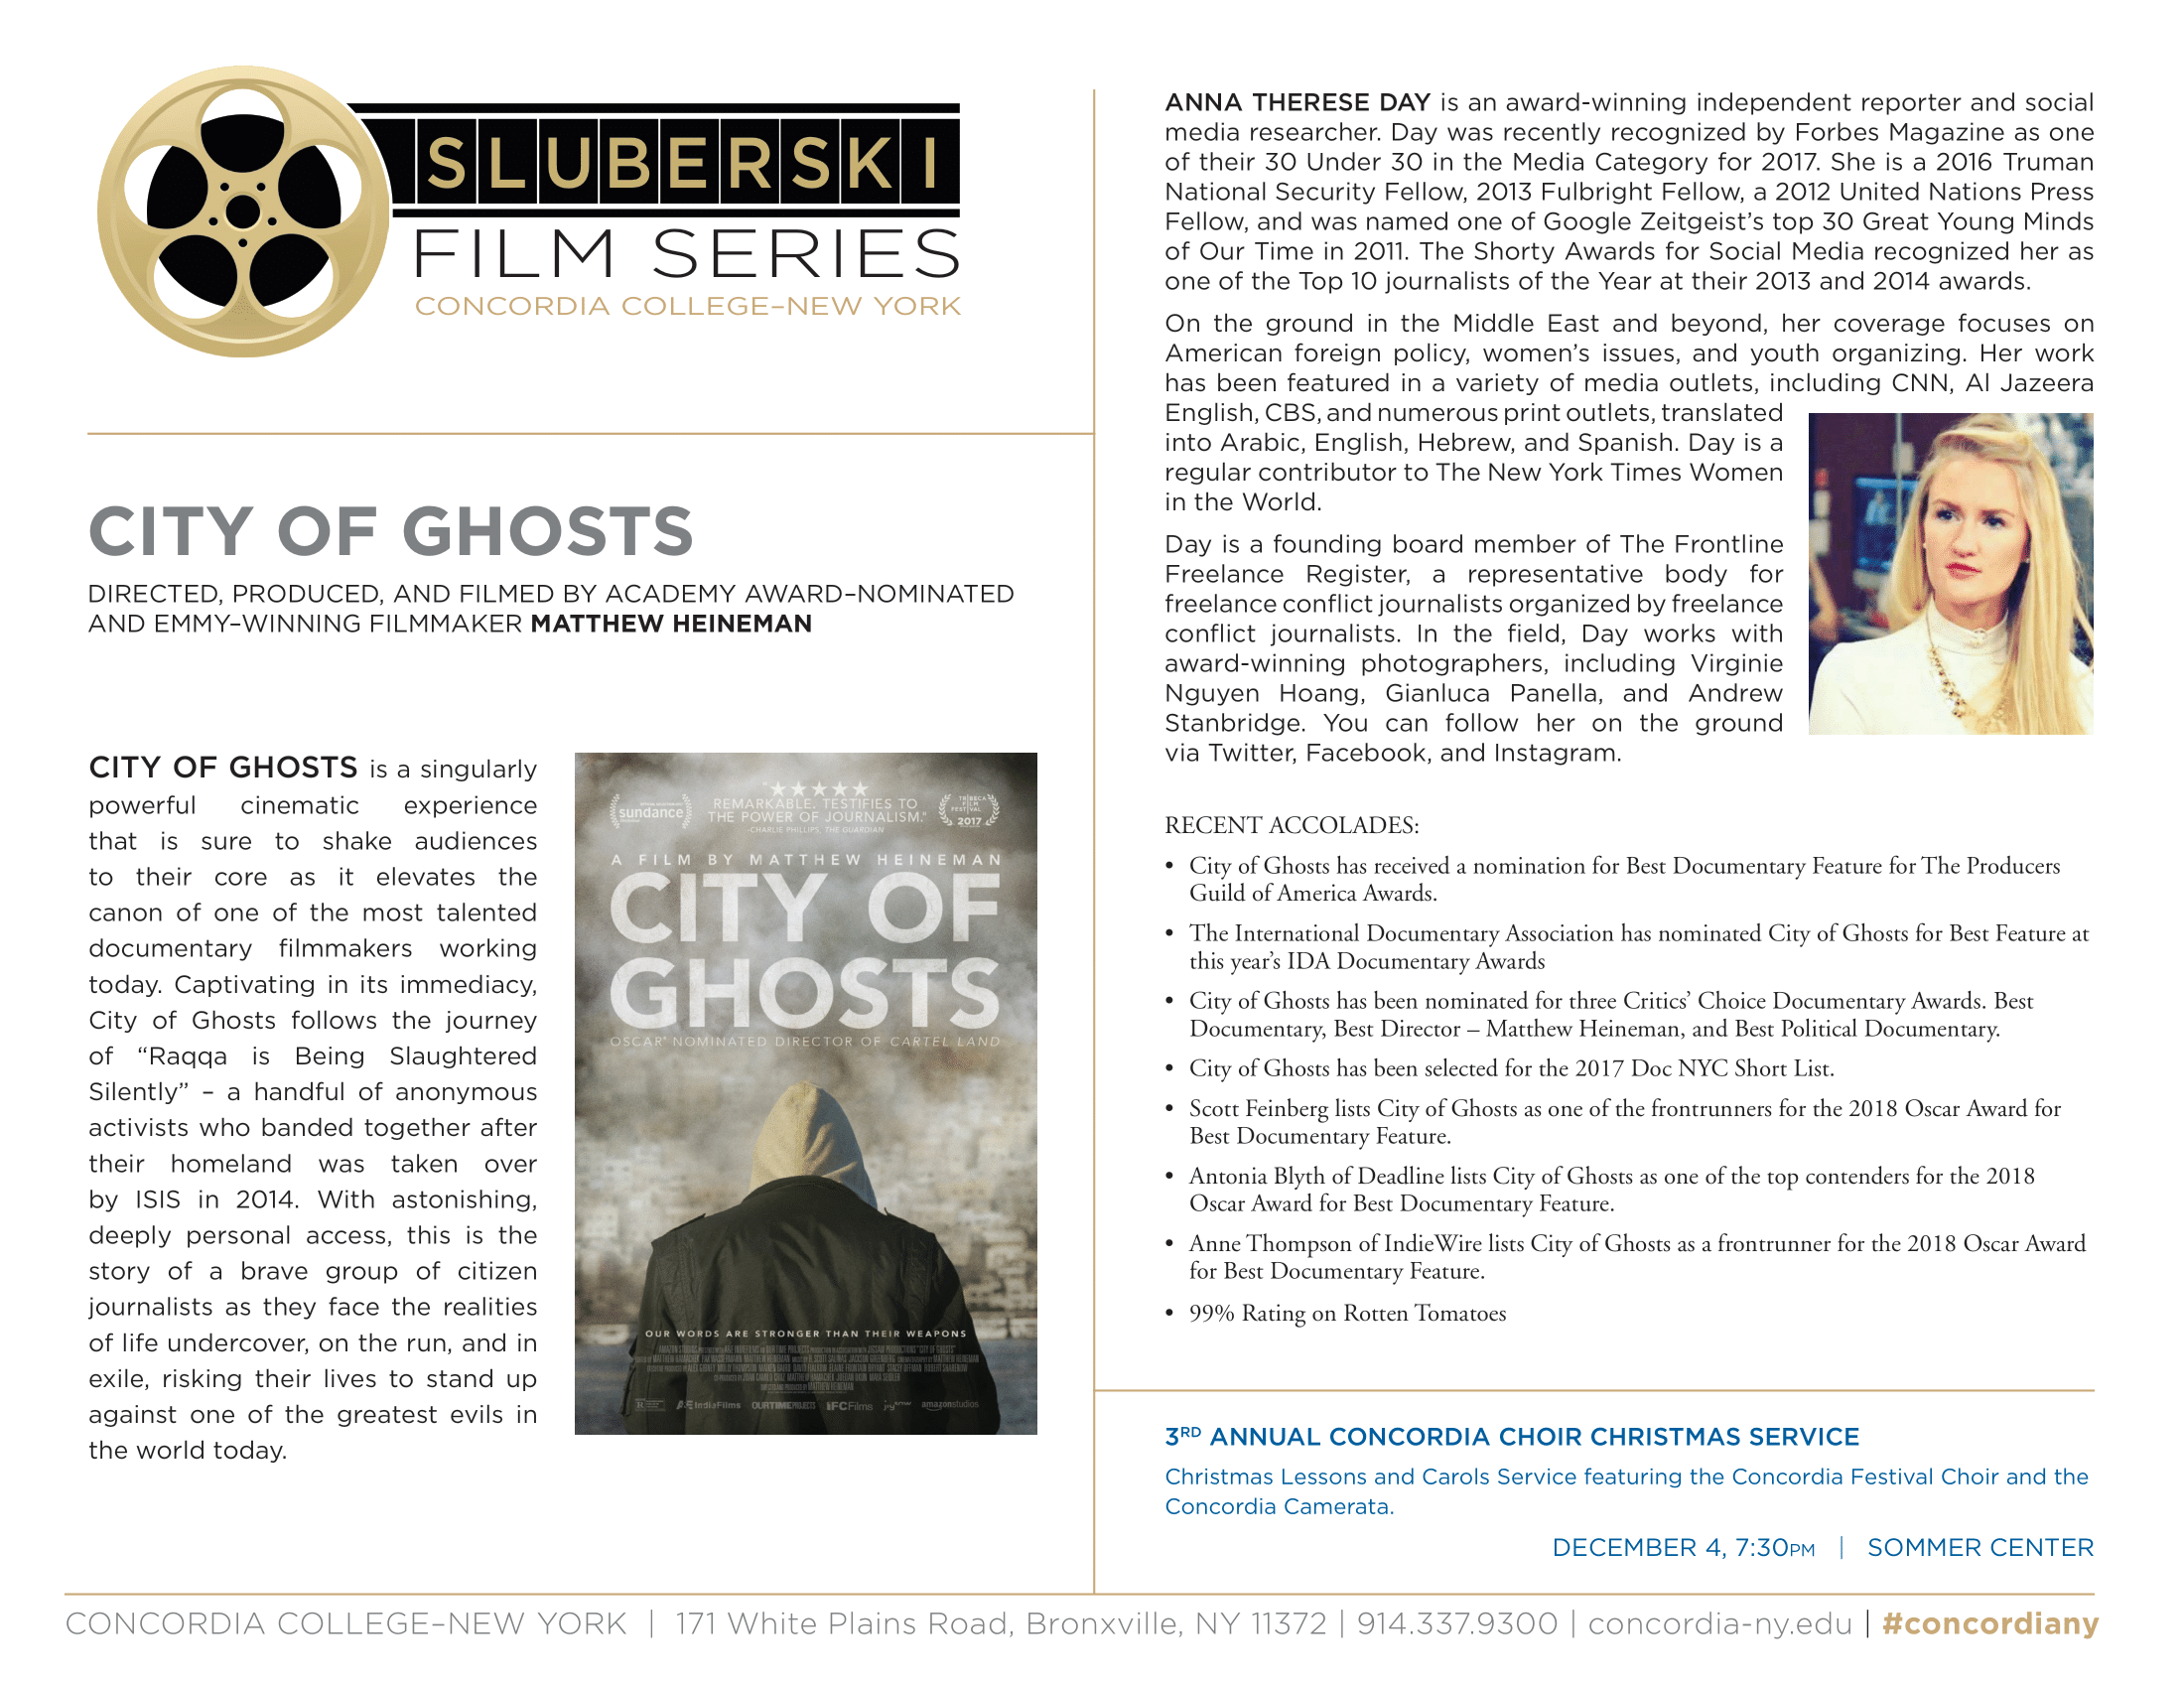 sluberski film series information sheet for city of ghosts